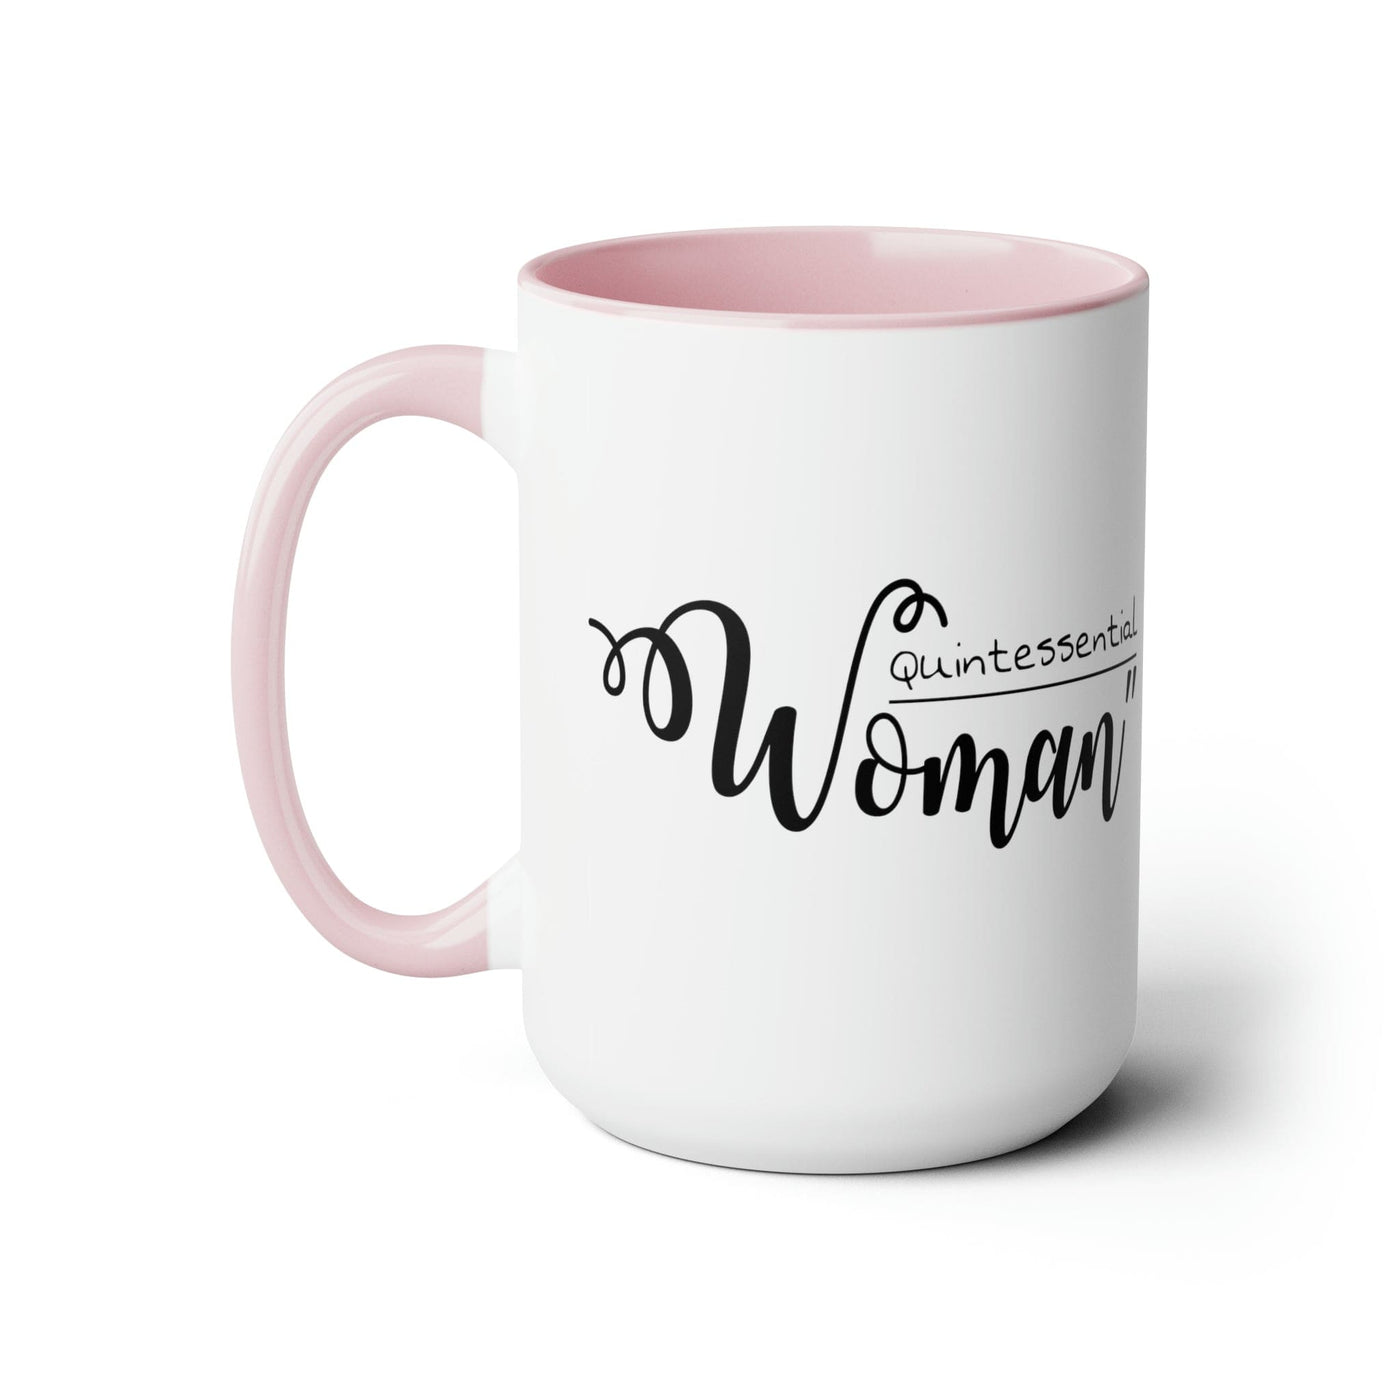 Accent Ceramic Coffee Mug 15oz - Quintessential Woman Black Illustration